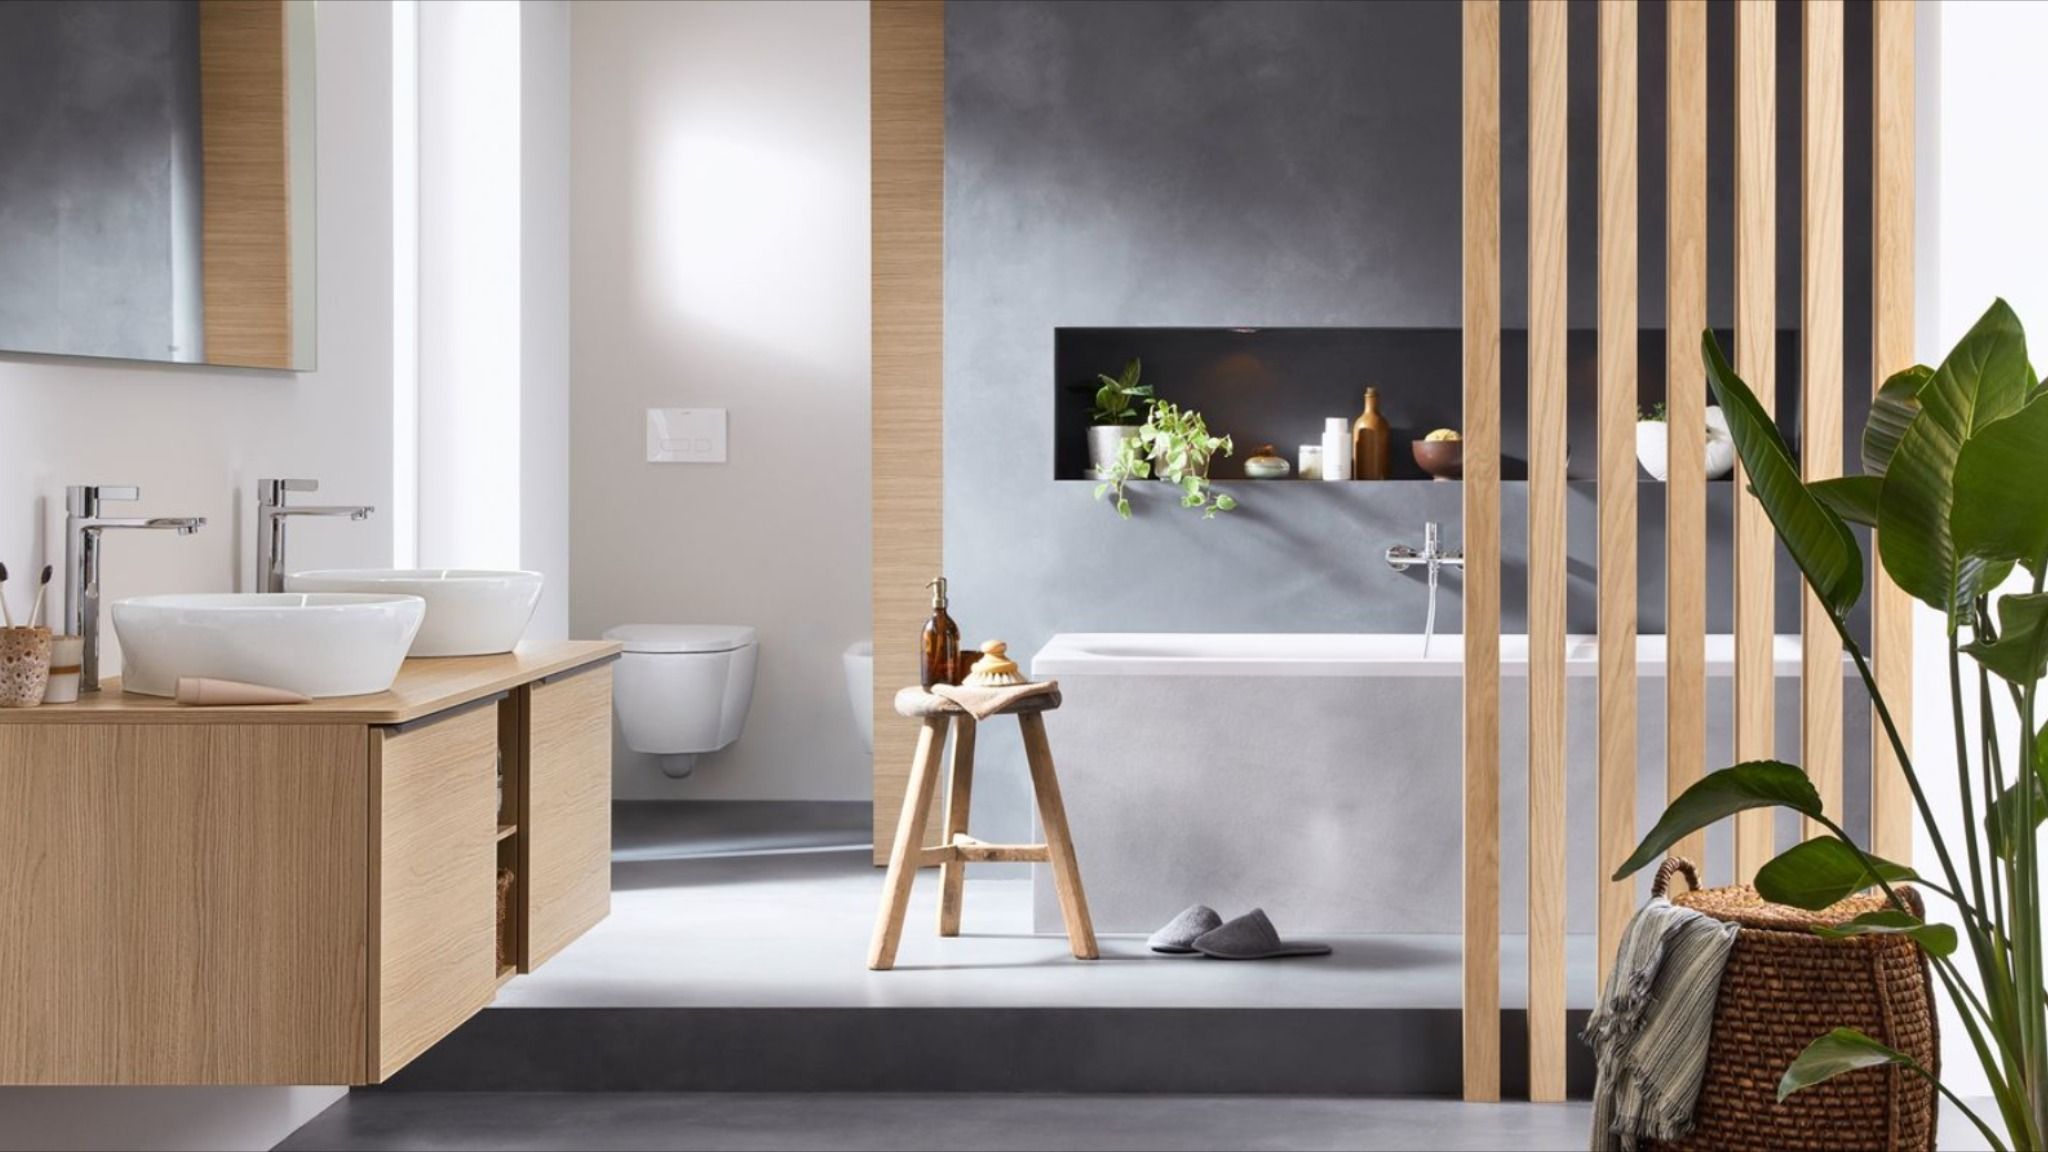 Bathroom with bamboo